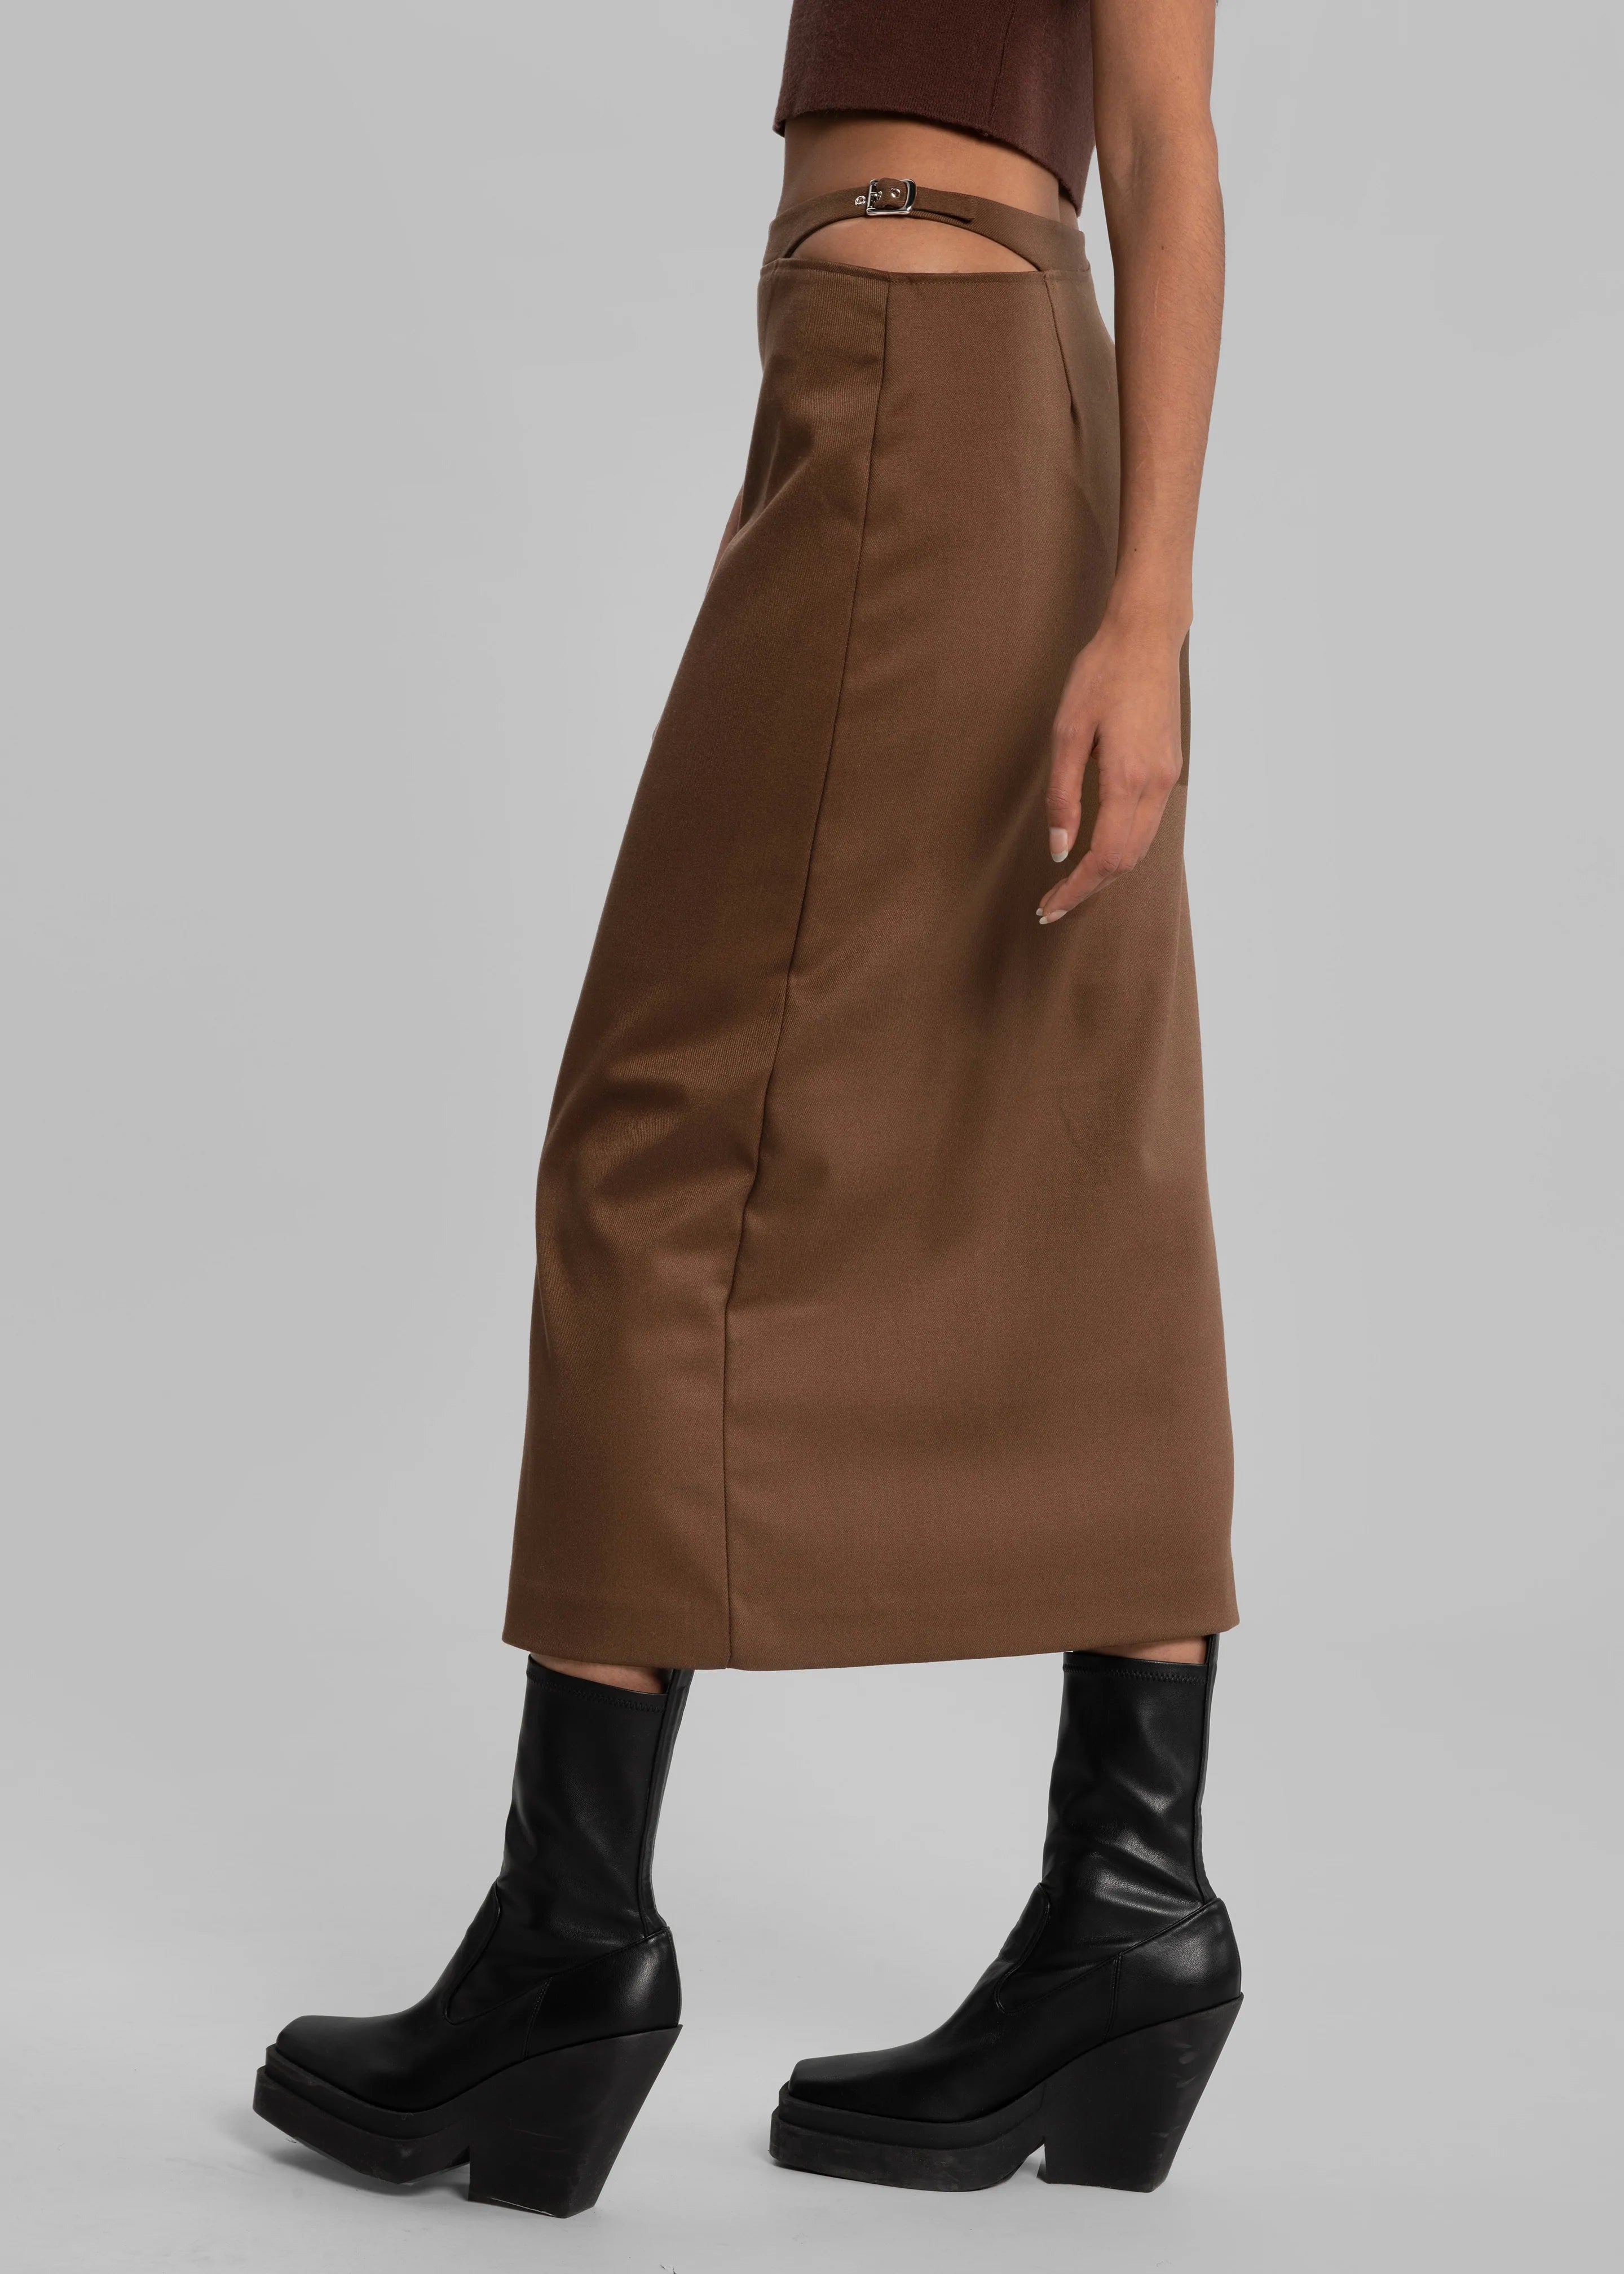 Stacia Cut Out Midi Skirt - Brown - 3